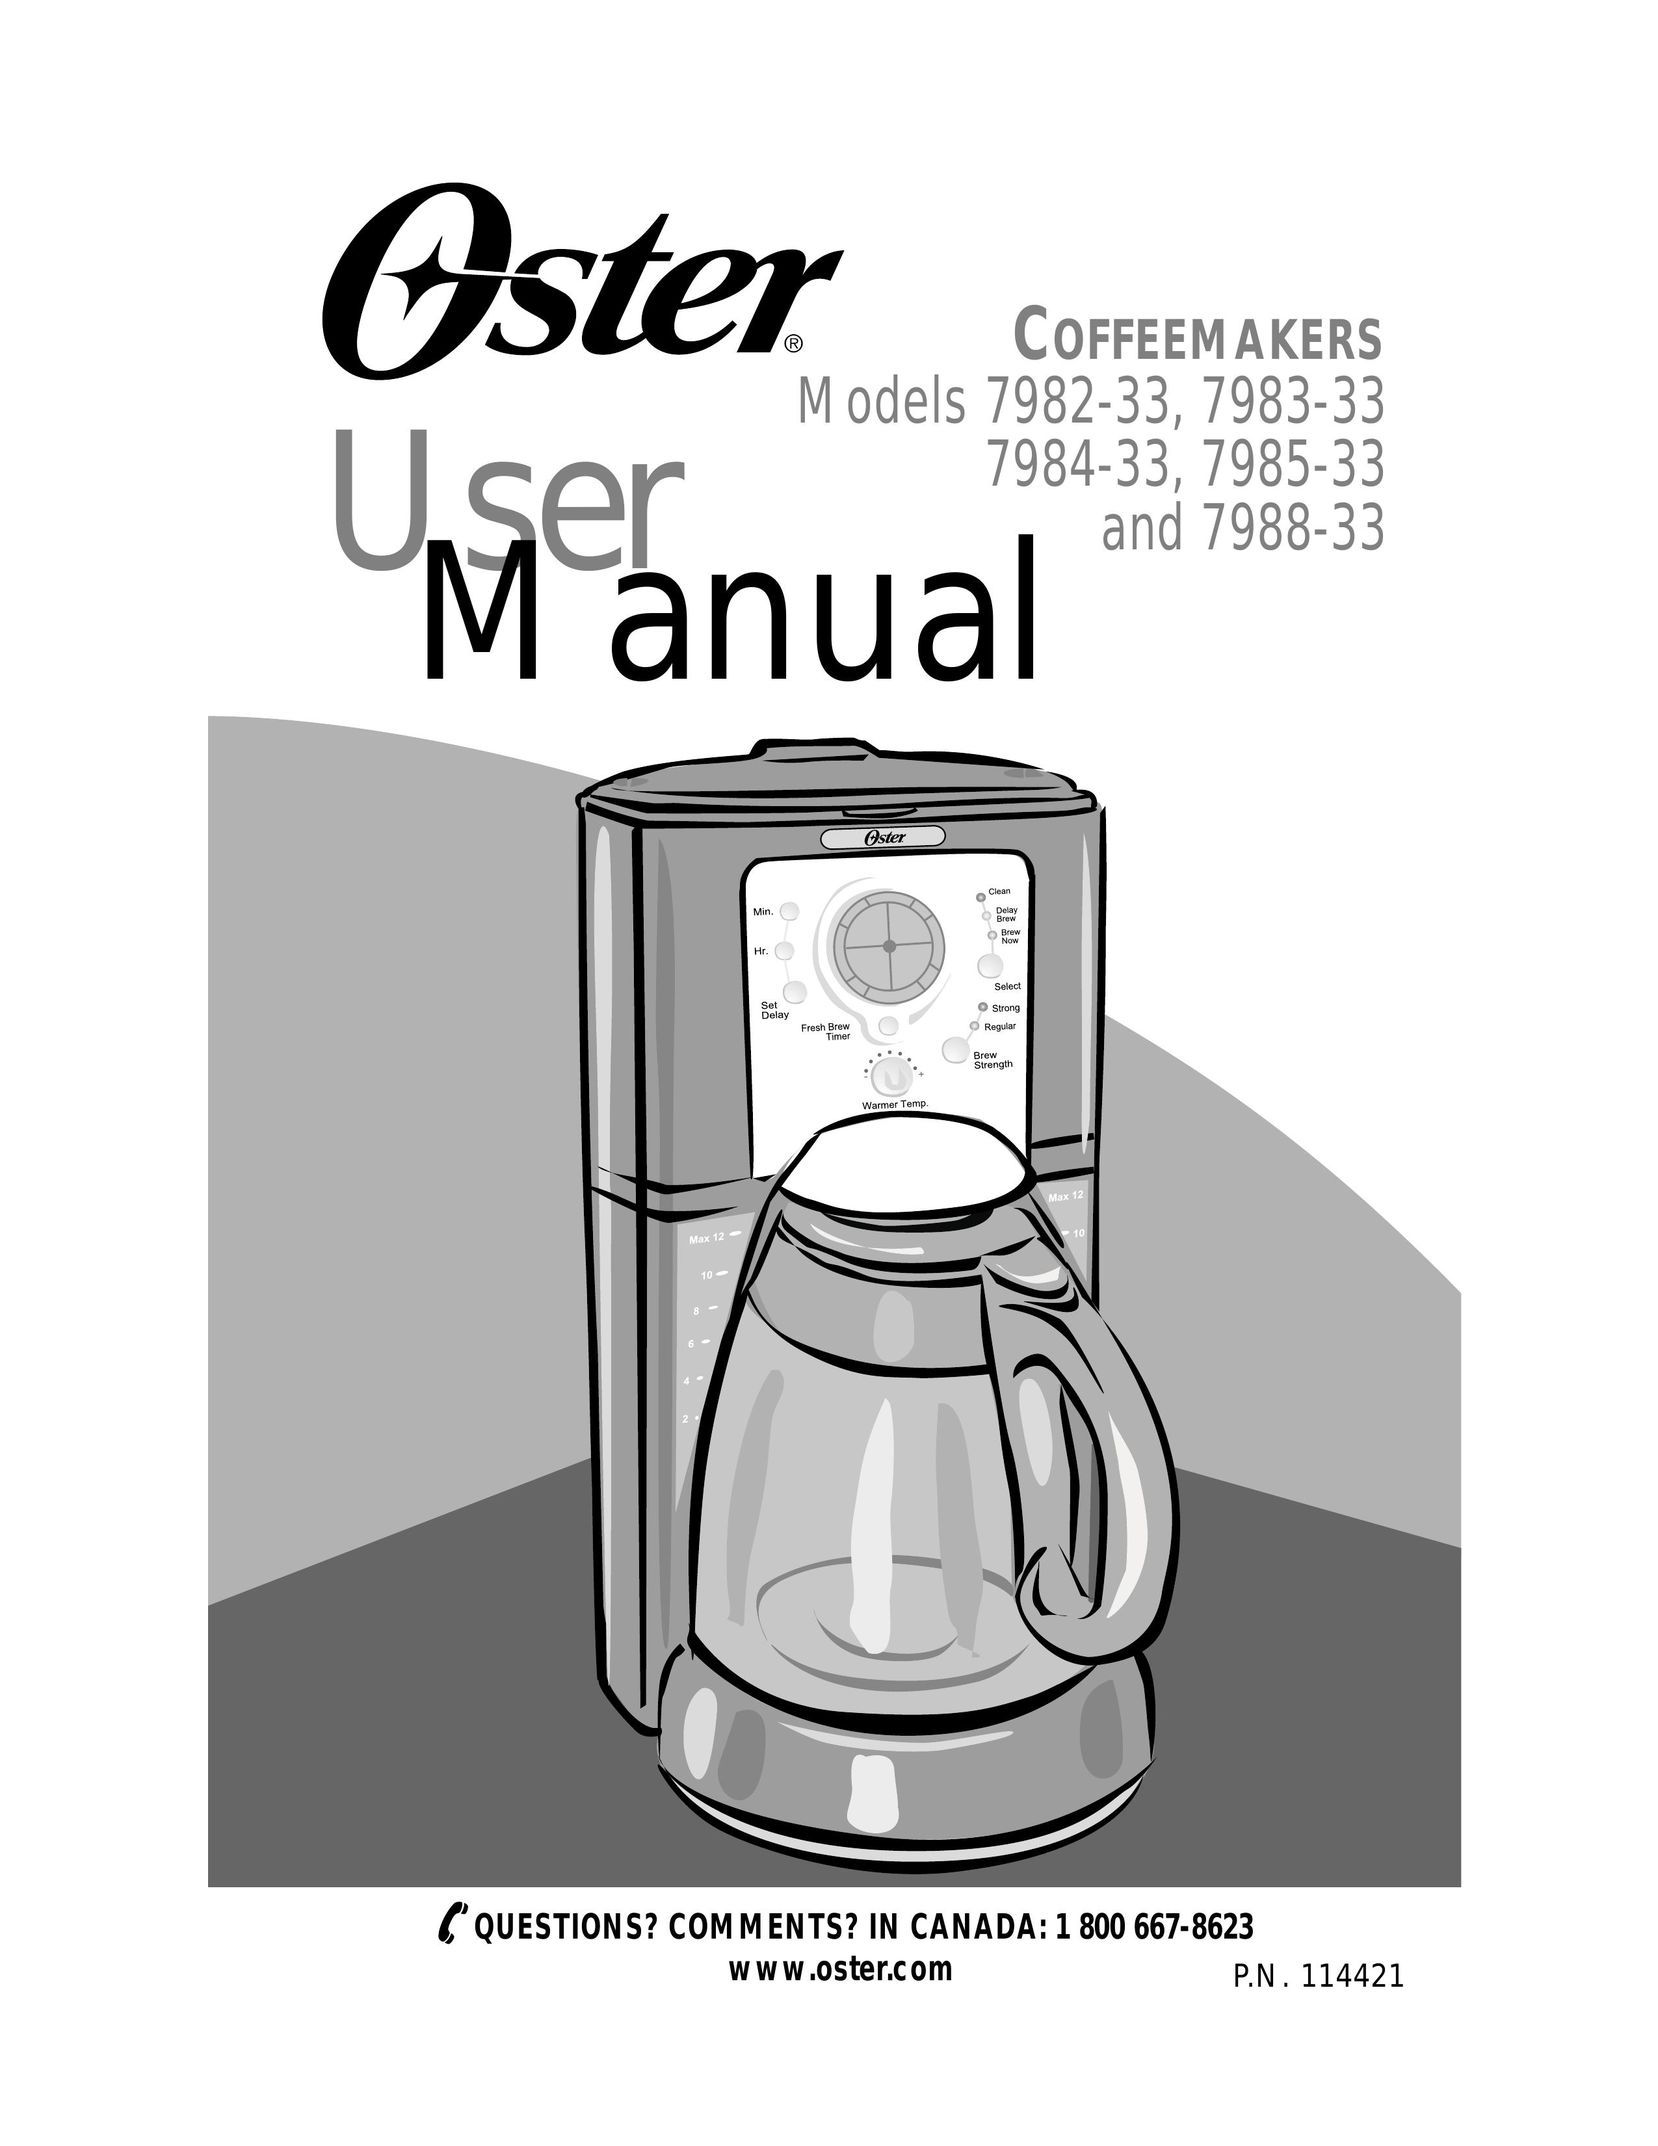 Mr. Coffee 7985-33 Coffeemaker User Manual